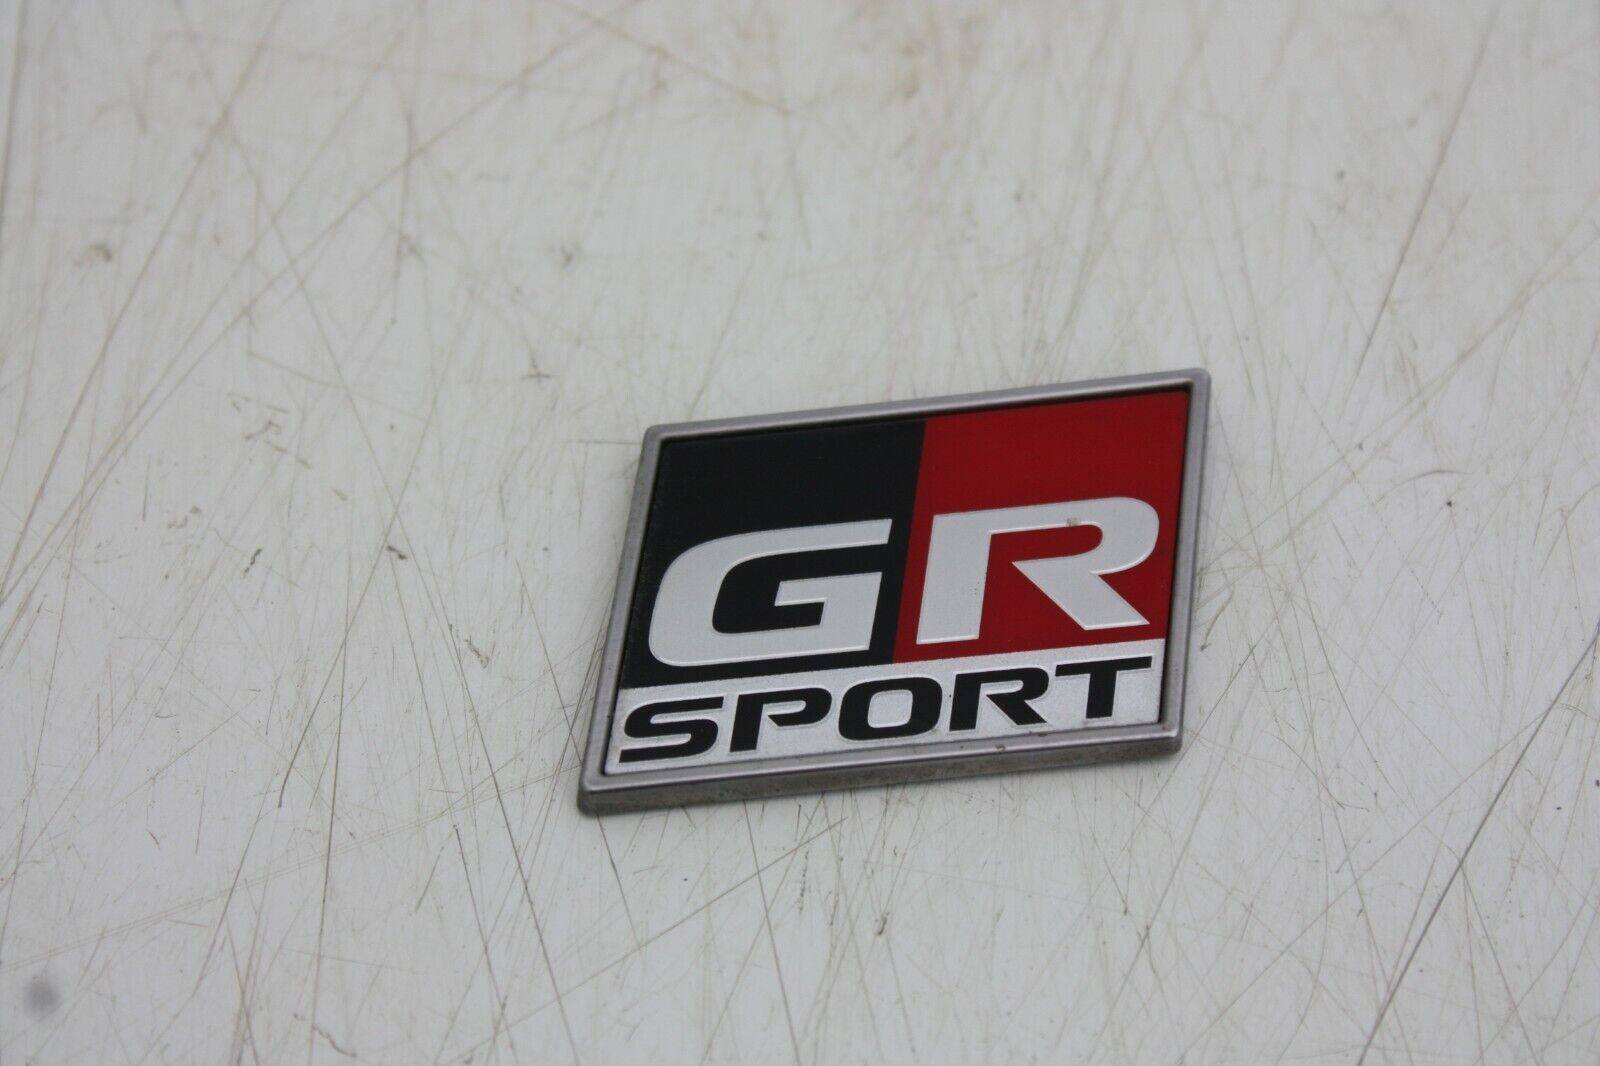 Toyota-CHR-GR-Sport-Logo-Emblem-Badge-Genuine-175863181144